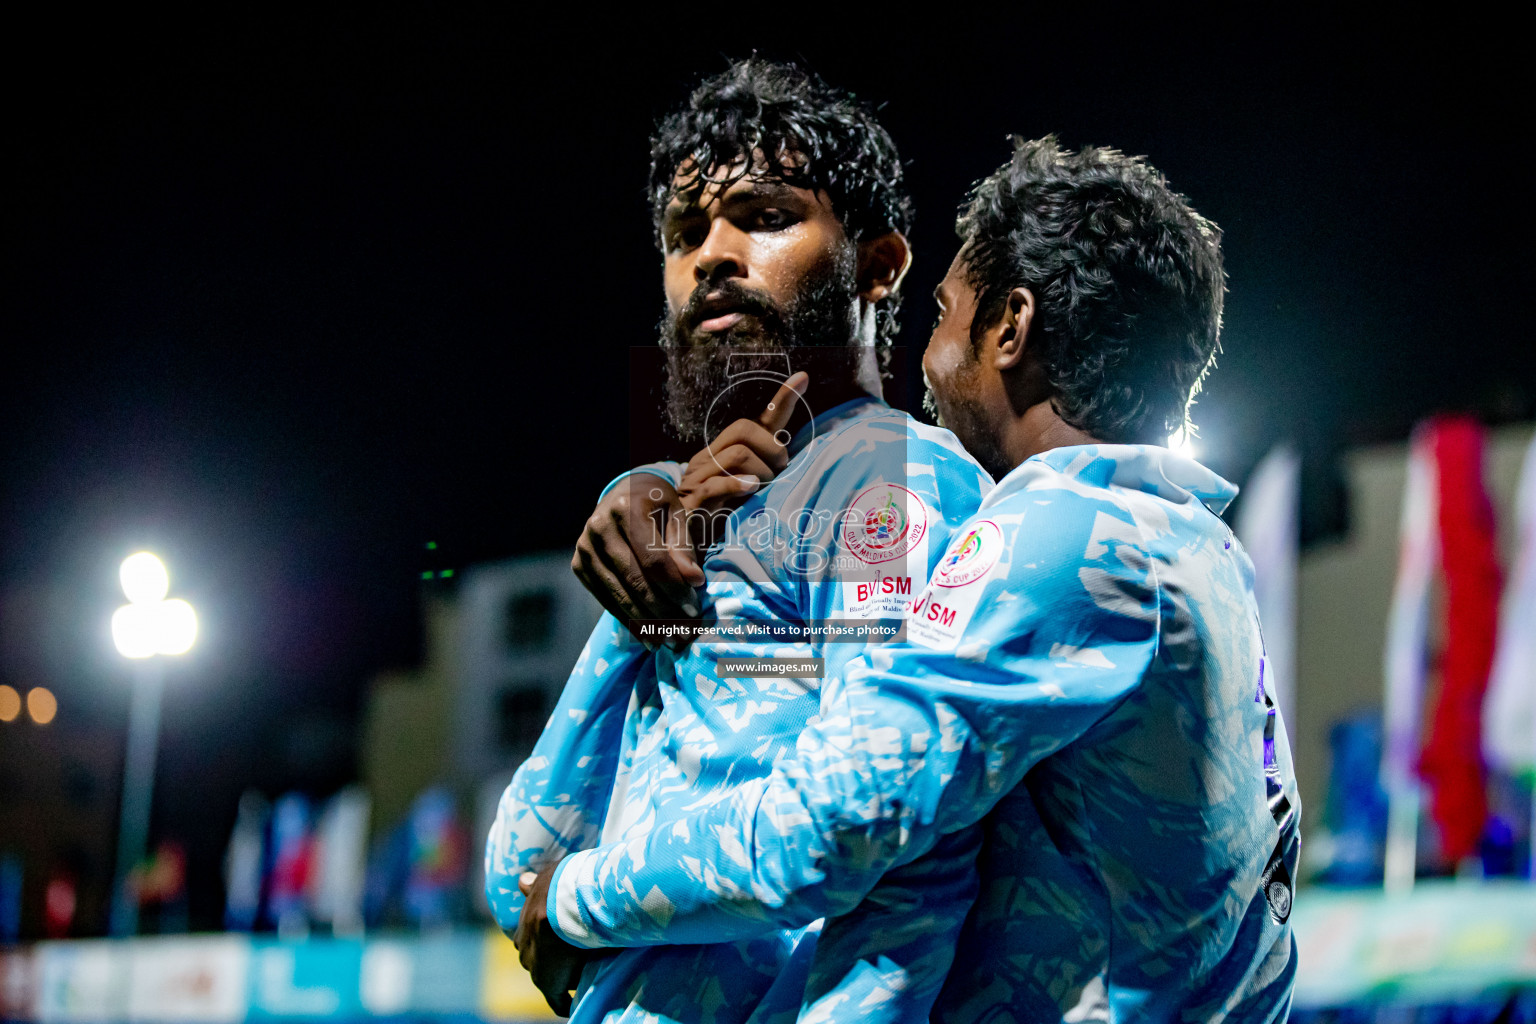 Team Fenaka vs MPL in the Finals of Club Maldives 2022 was held in Hulhumale', Maldives on Saturday, 5th November 2022. Photos: Hassan Simah / images.mv